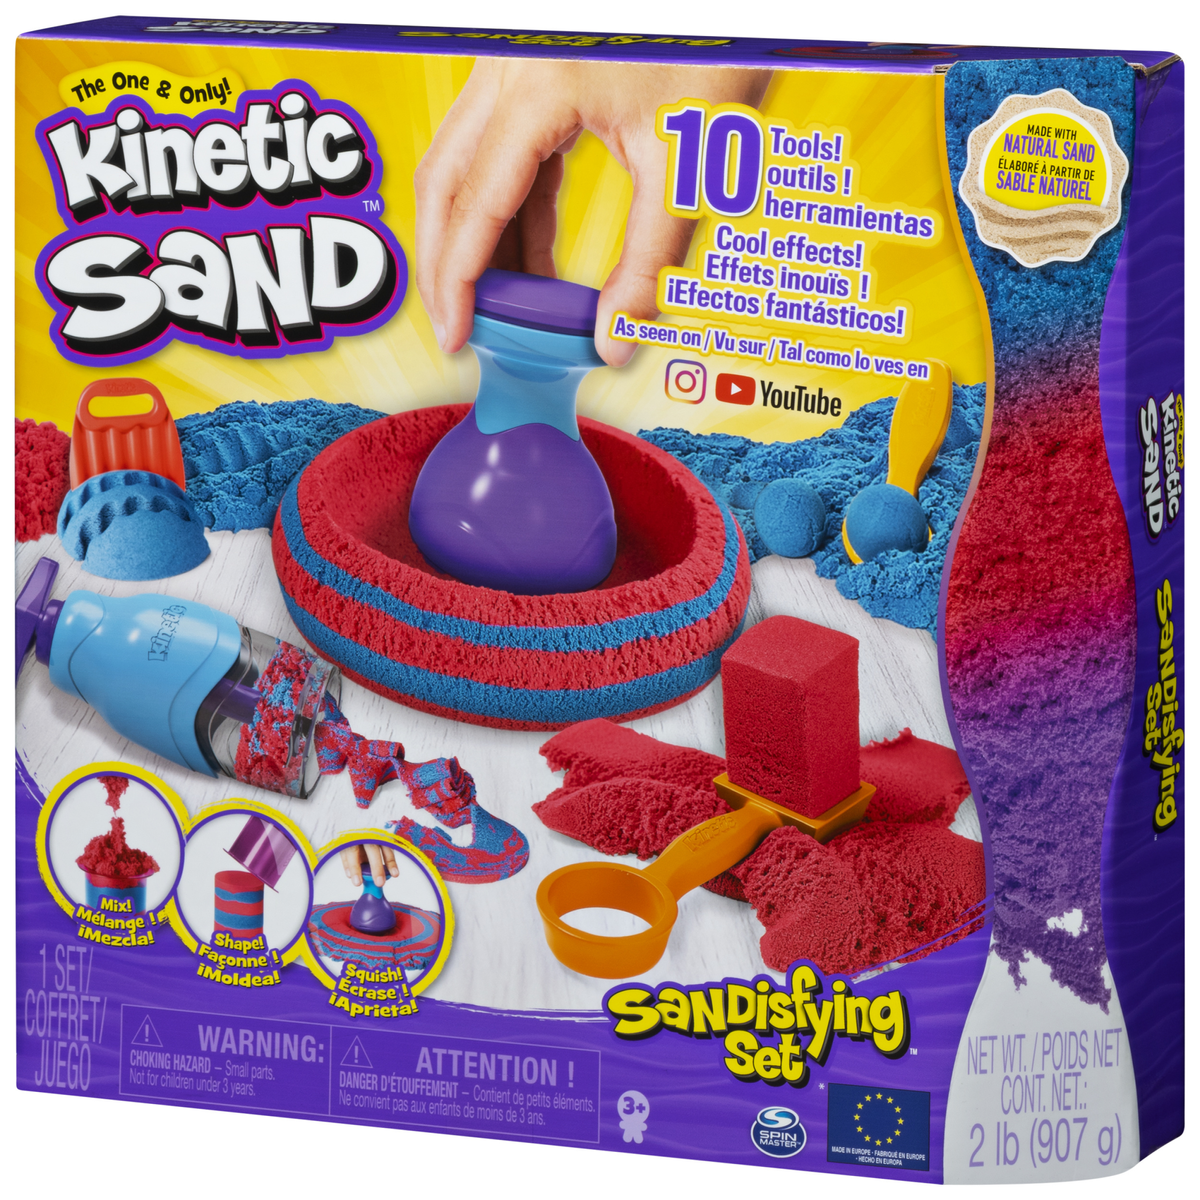 Lernspielzeug, MASTER Set 907gr Sand SPIN bunt Sandisfying Kinetic